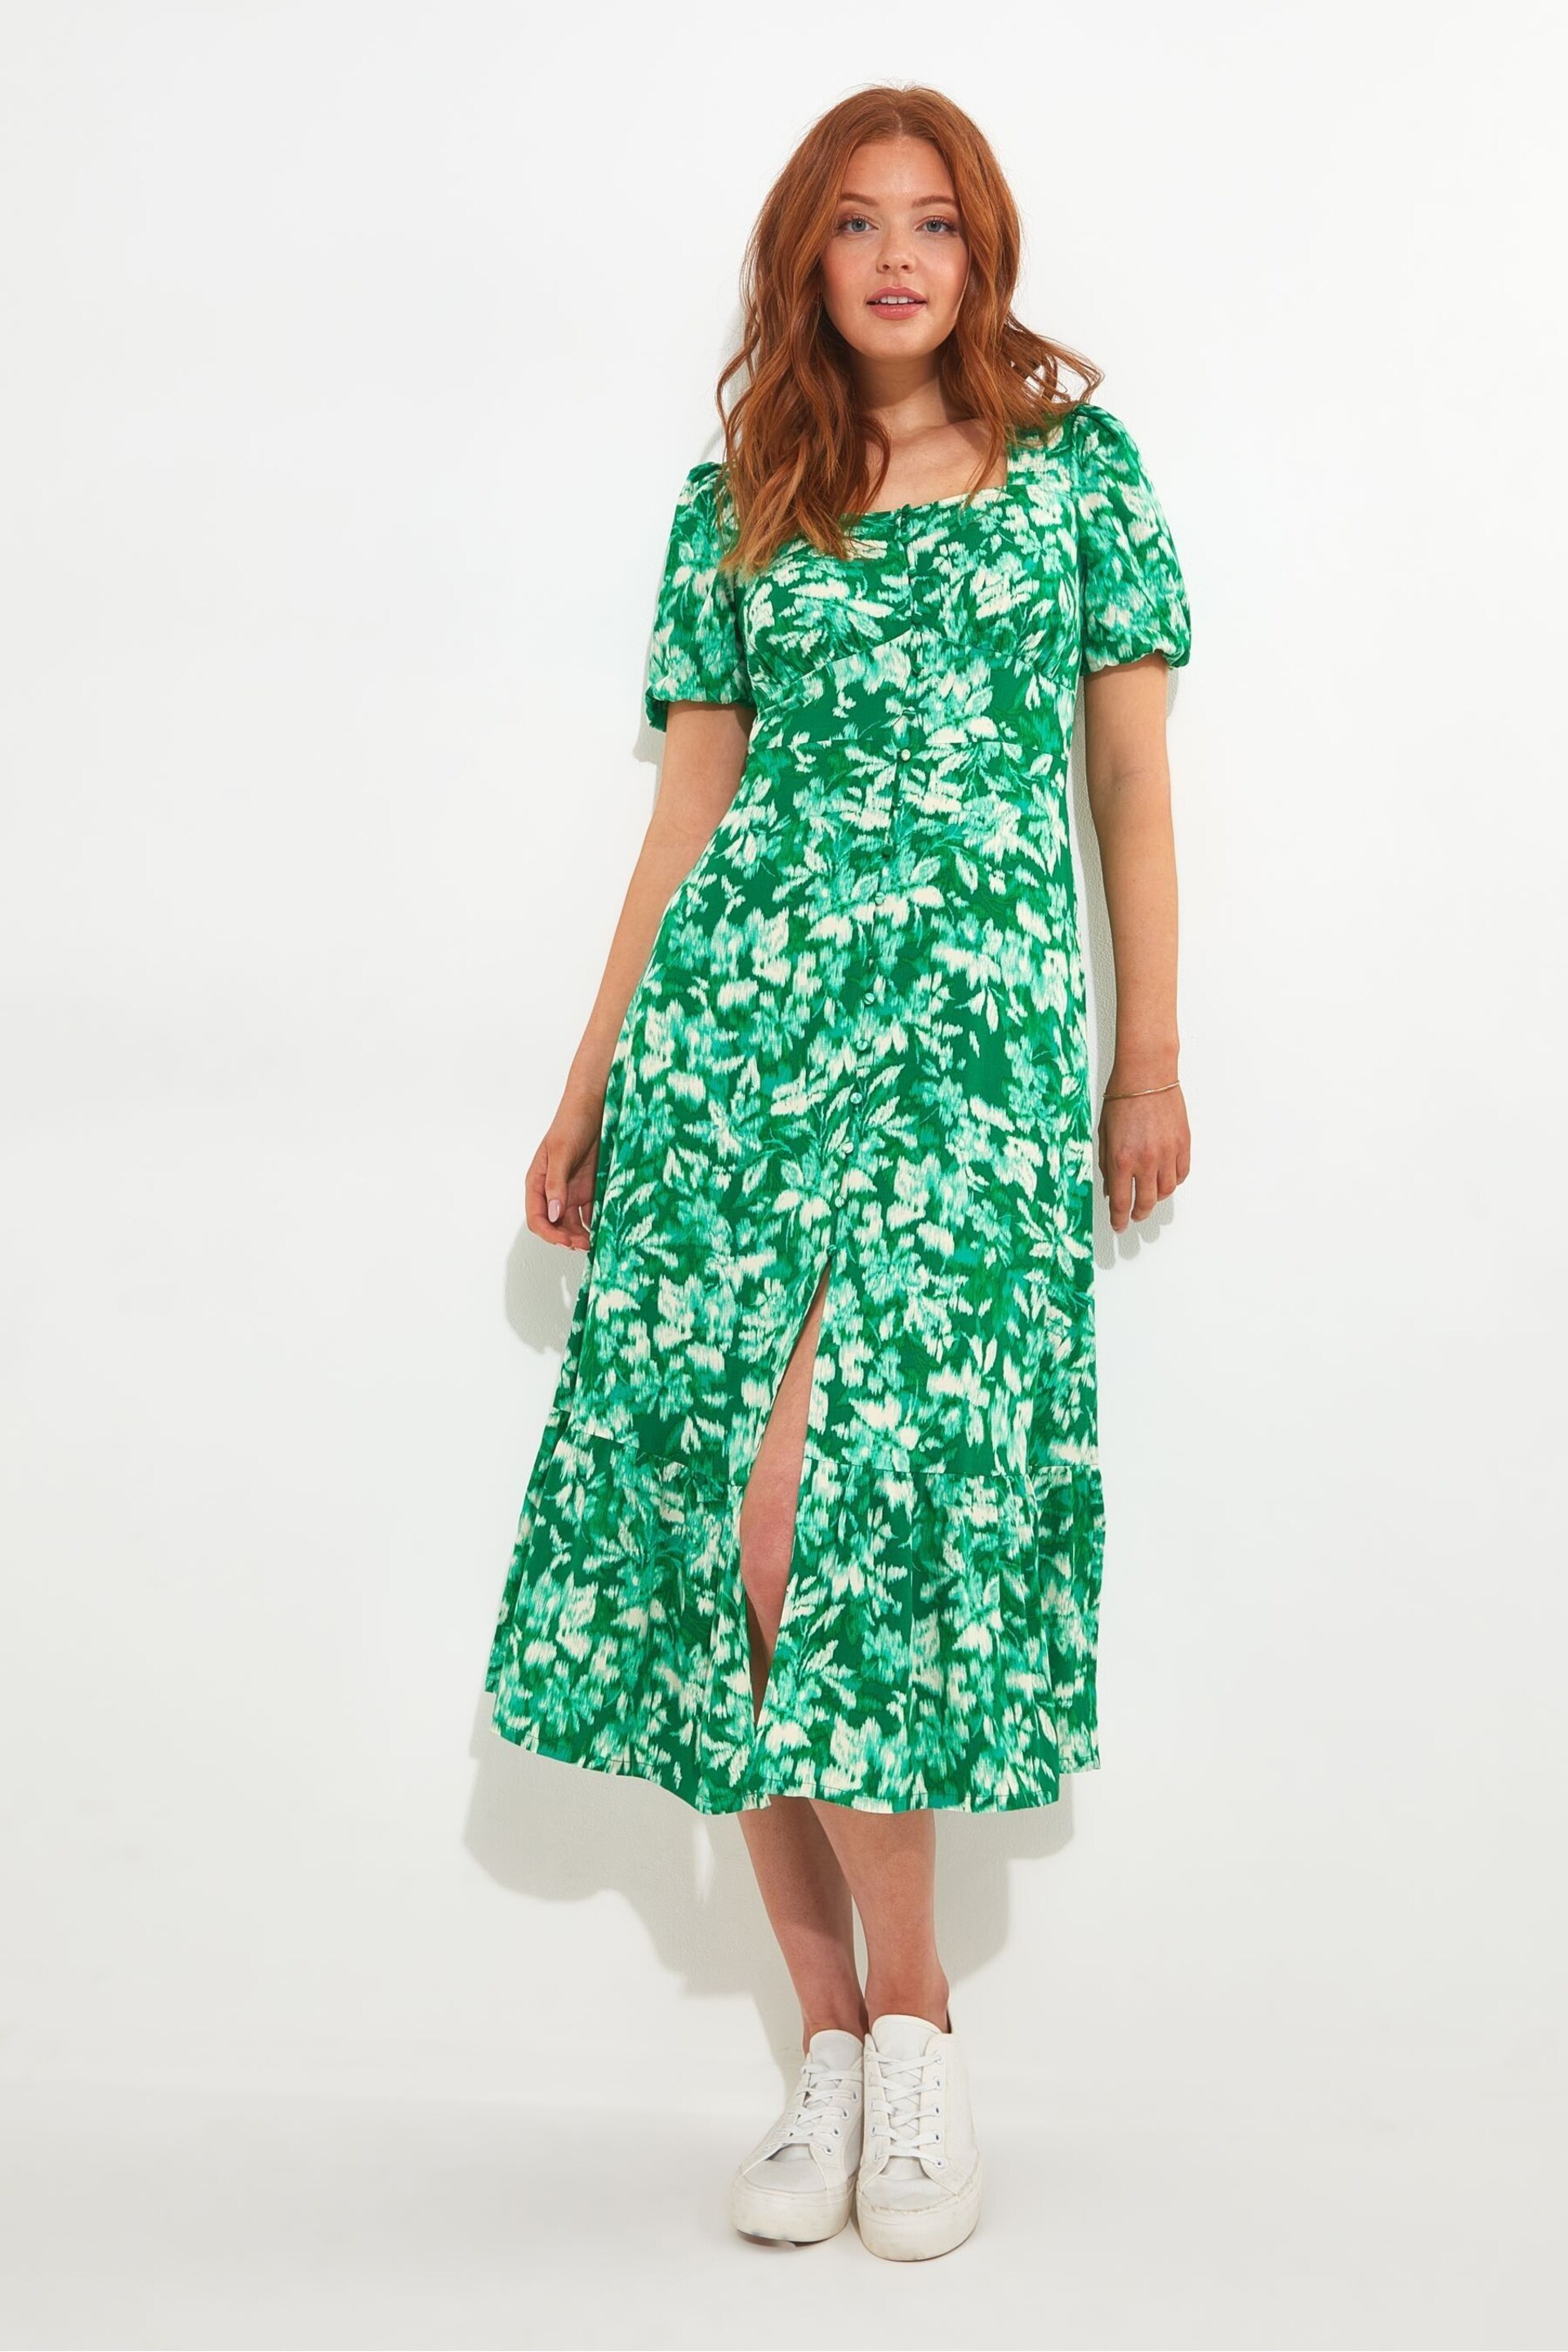 Joe Browns Green Blurred Floral Midi Dress - Image 1 of 4